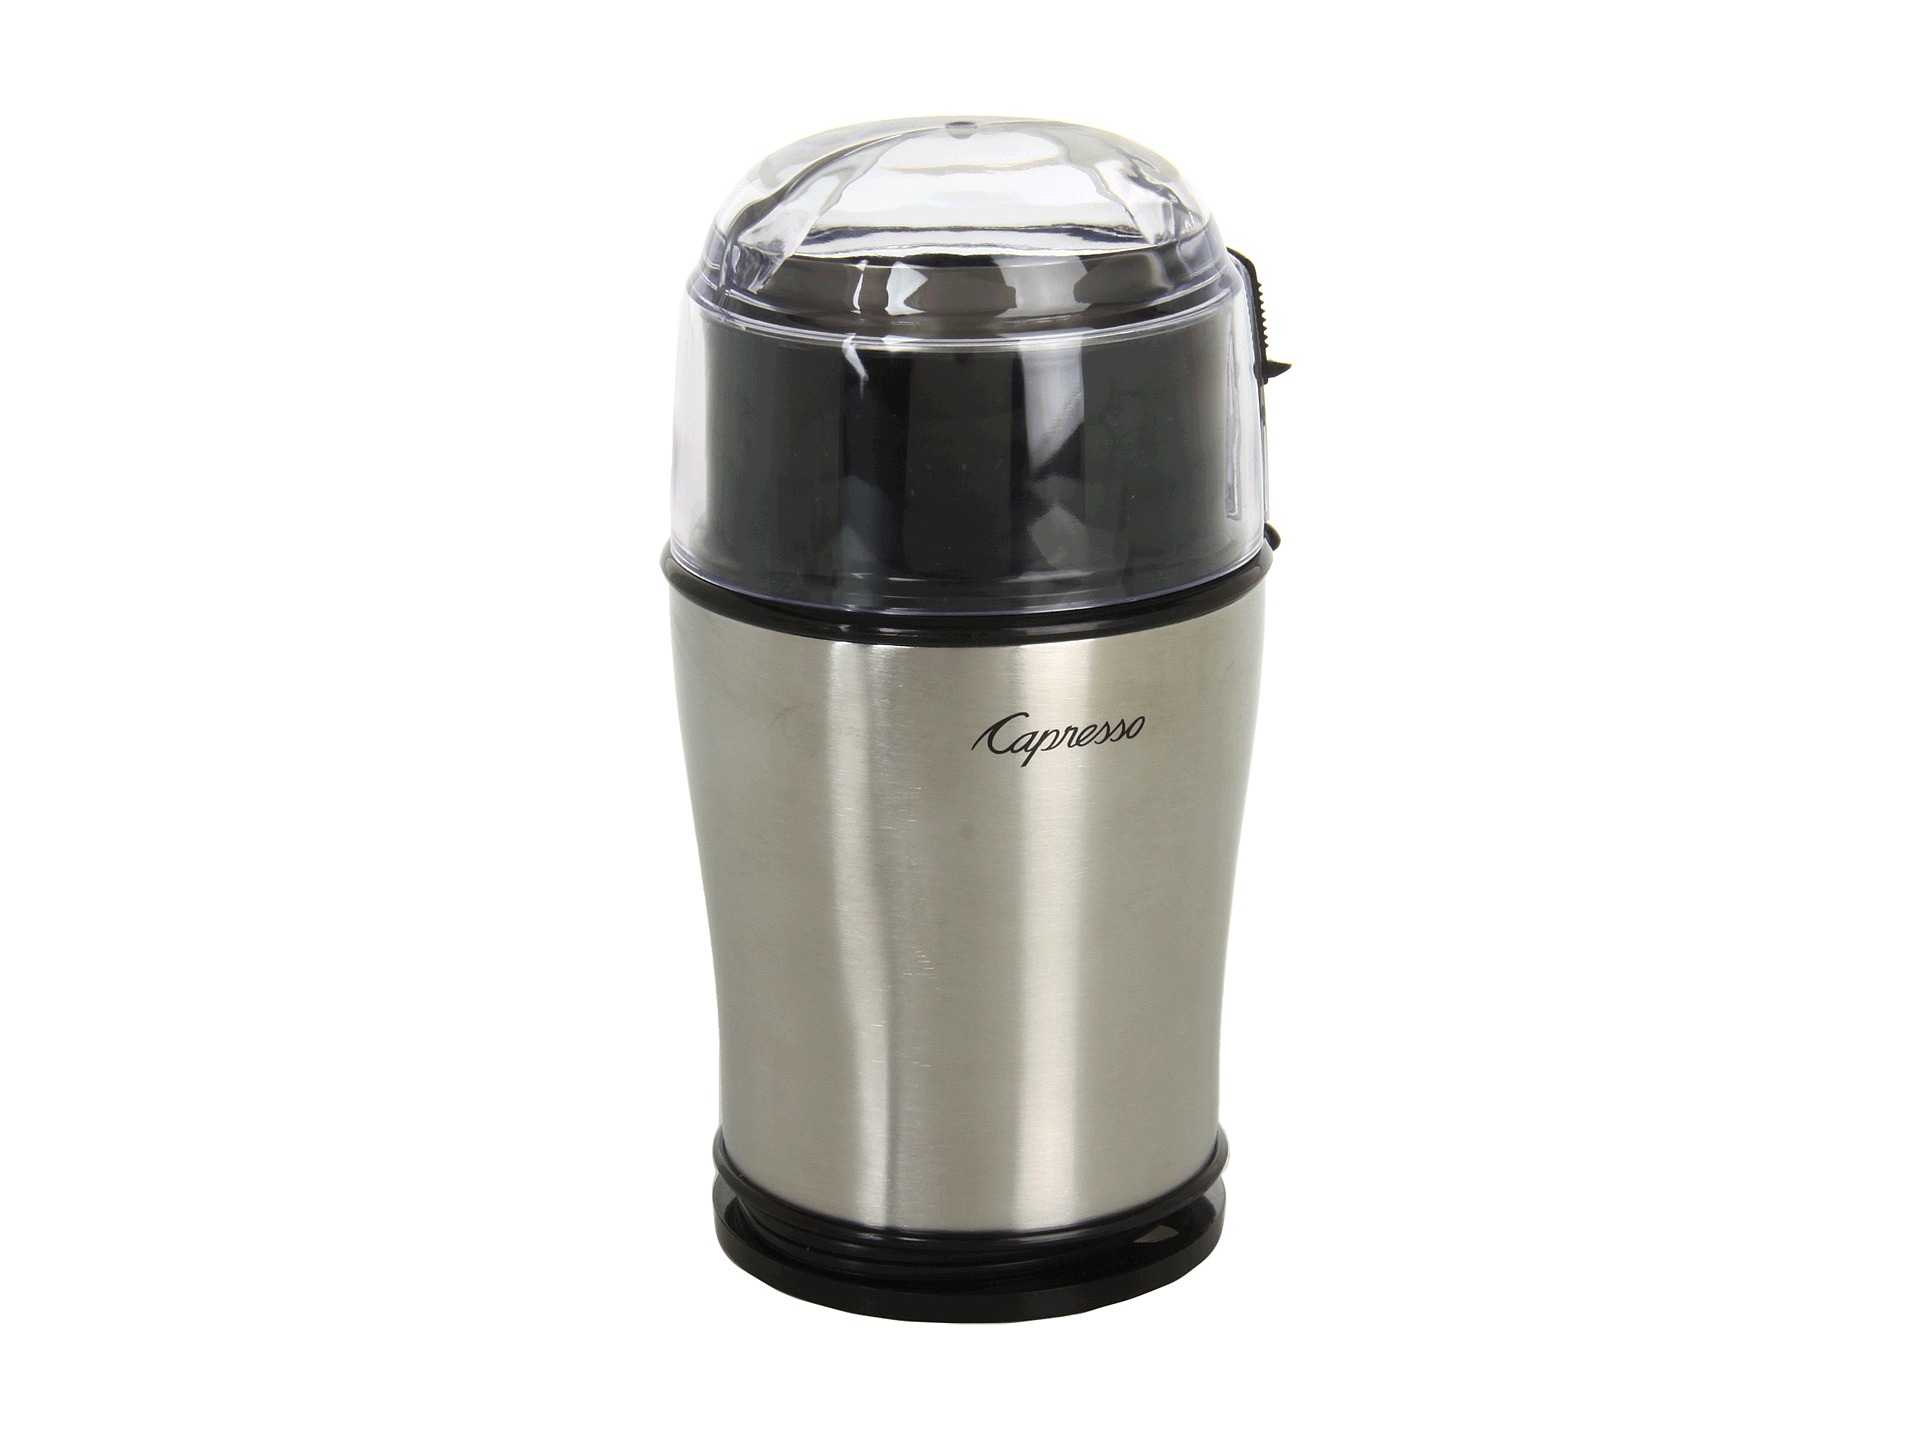 Capresso Cool Grind Coffee Spice Blade Grinder Model 503 Stainless